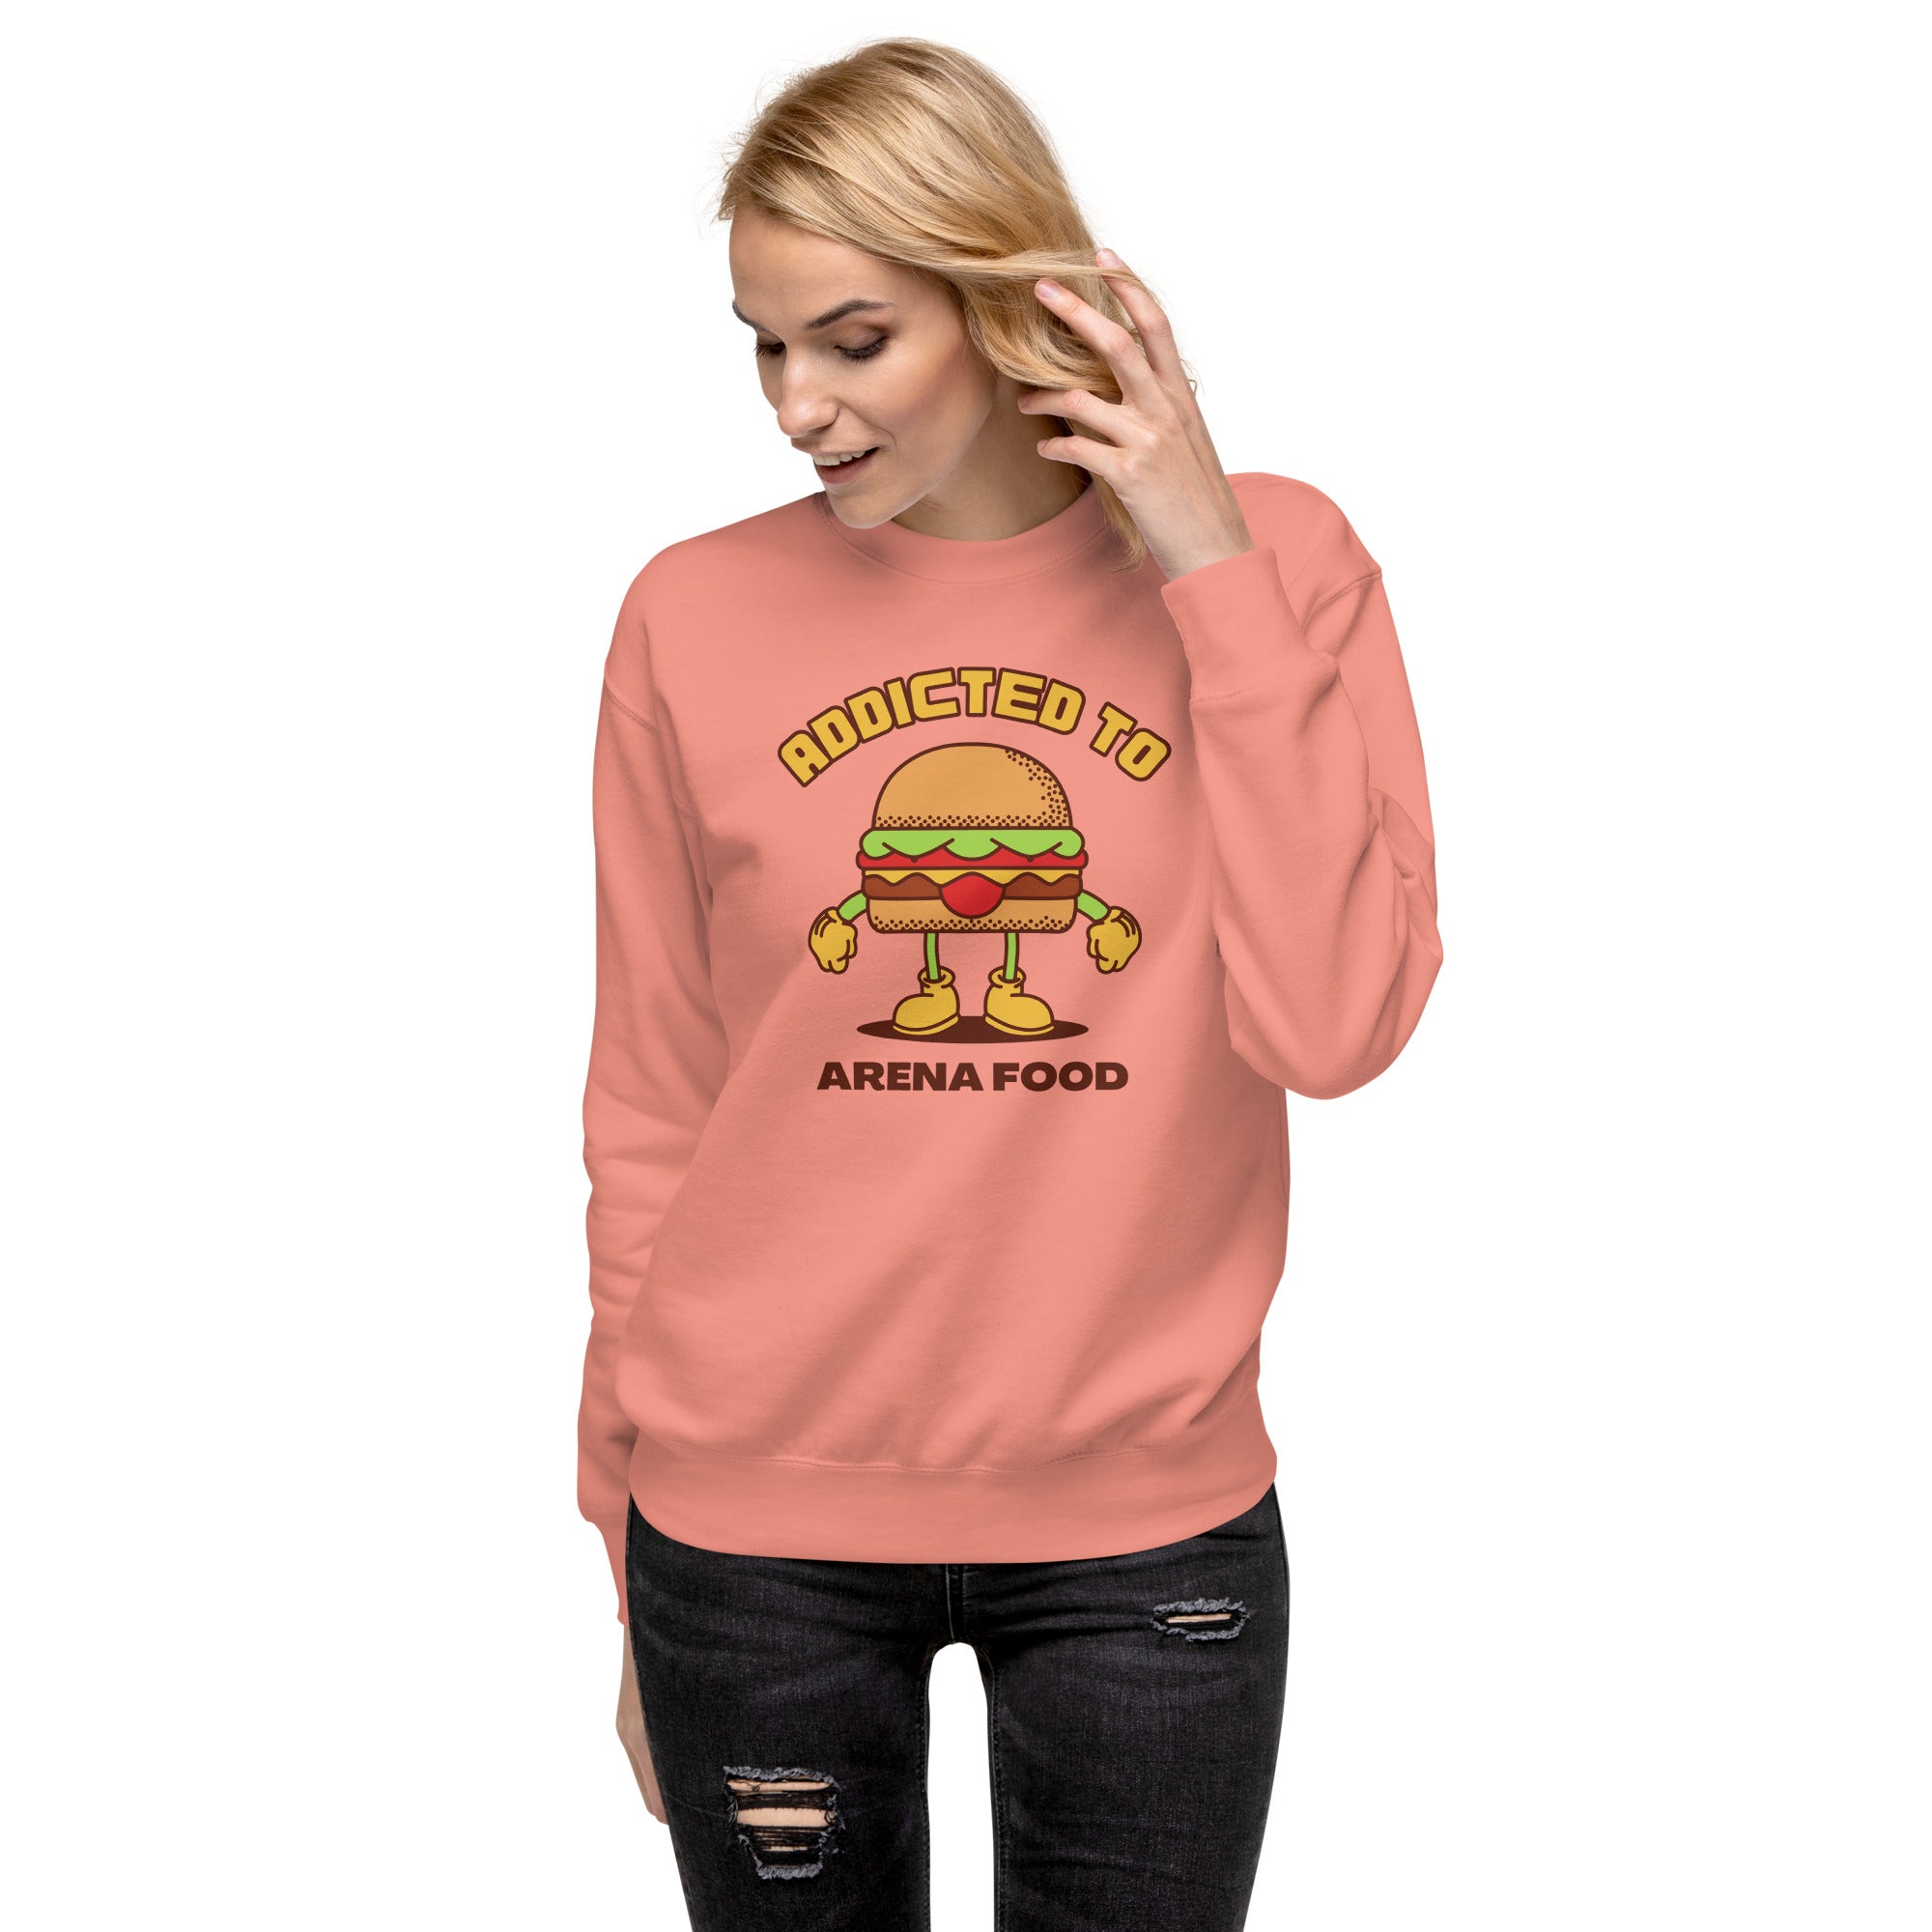 Addicted To Arena Food Women's Premium Sweatshirt